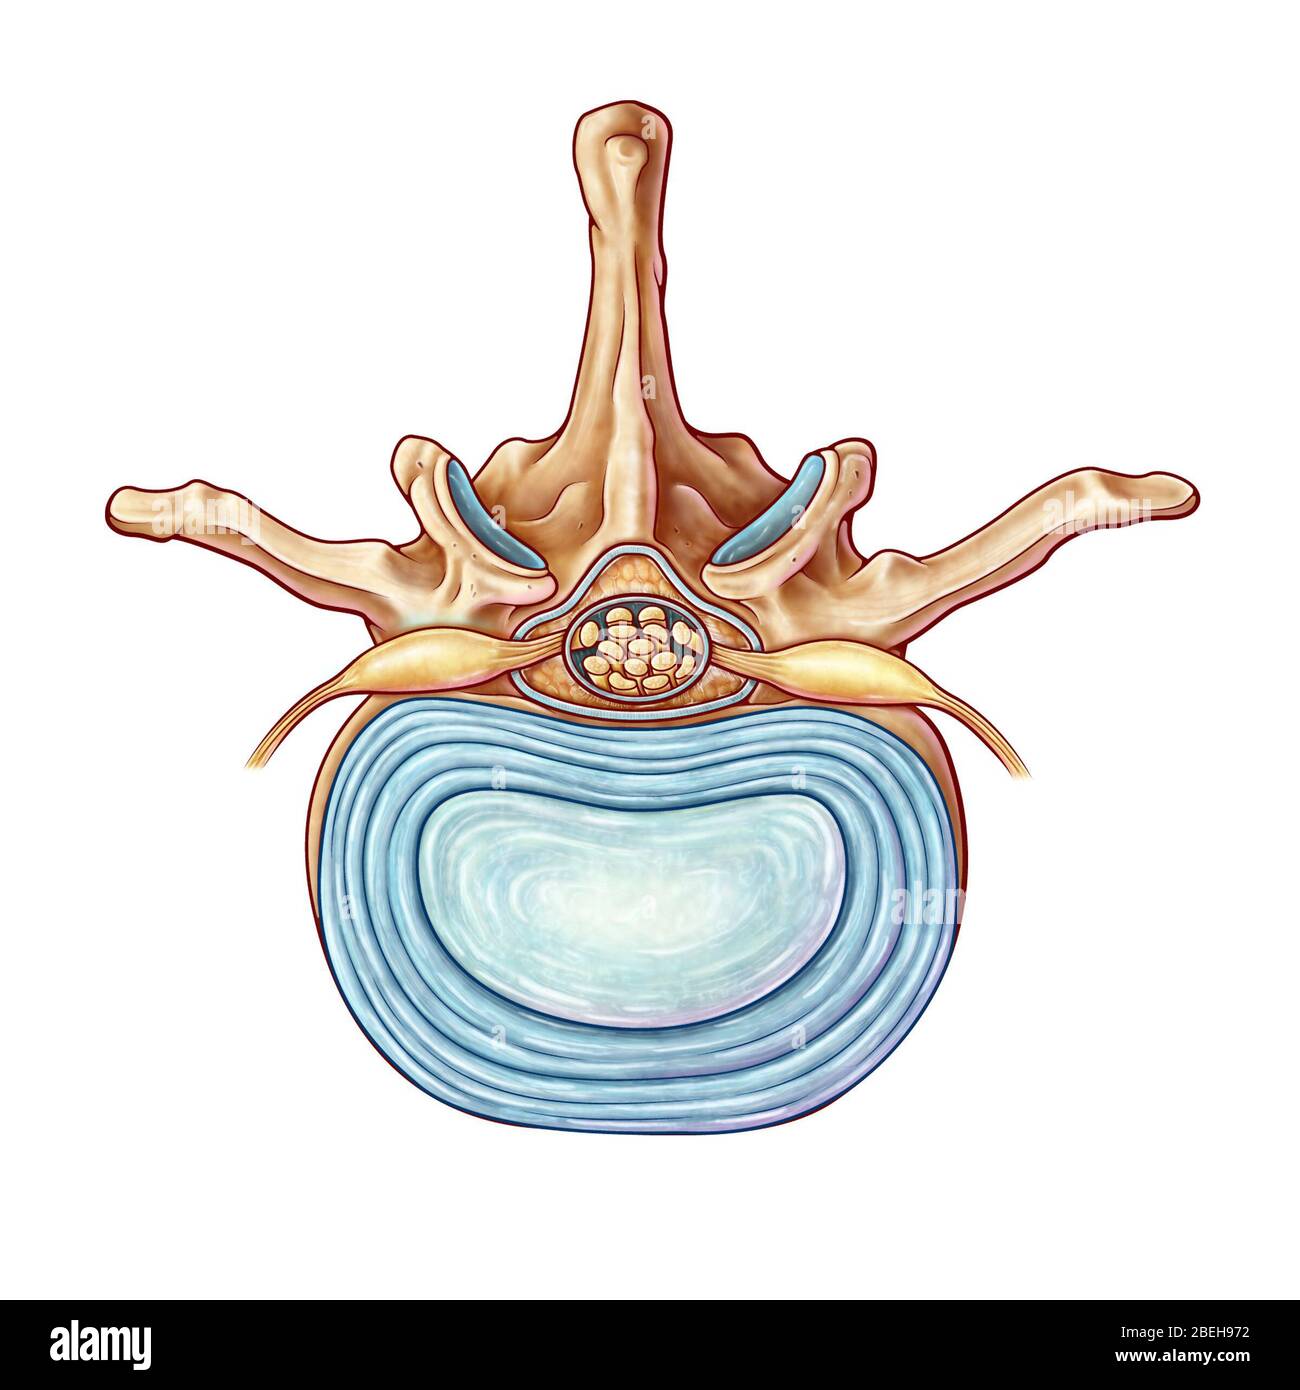 Lumbar Vertebra and Disk, illustration Stock Photo